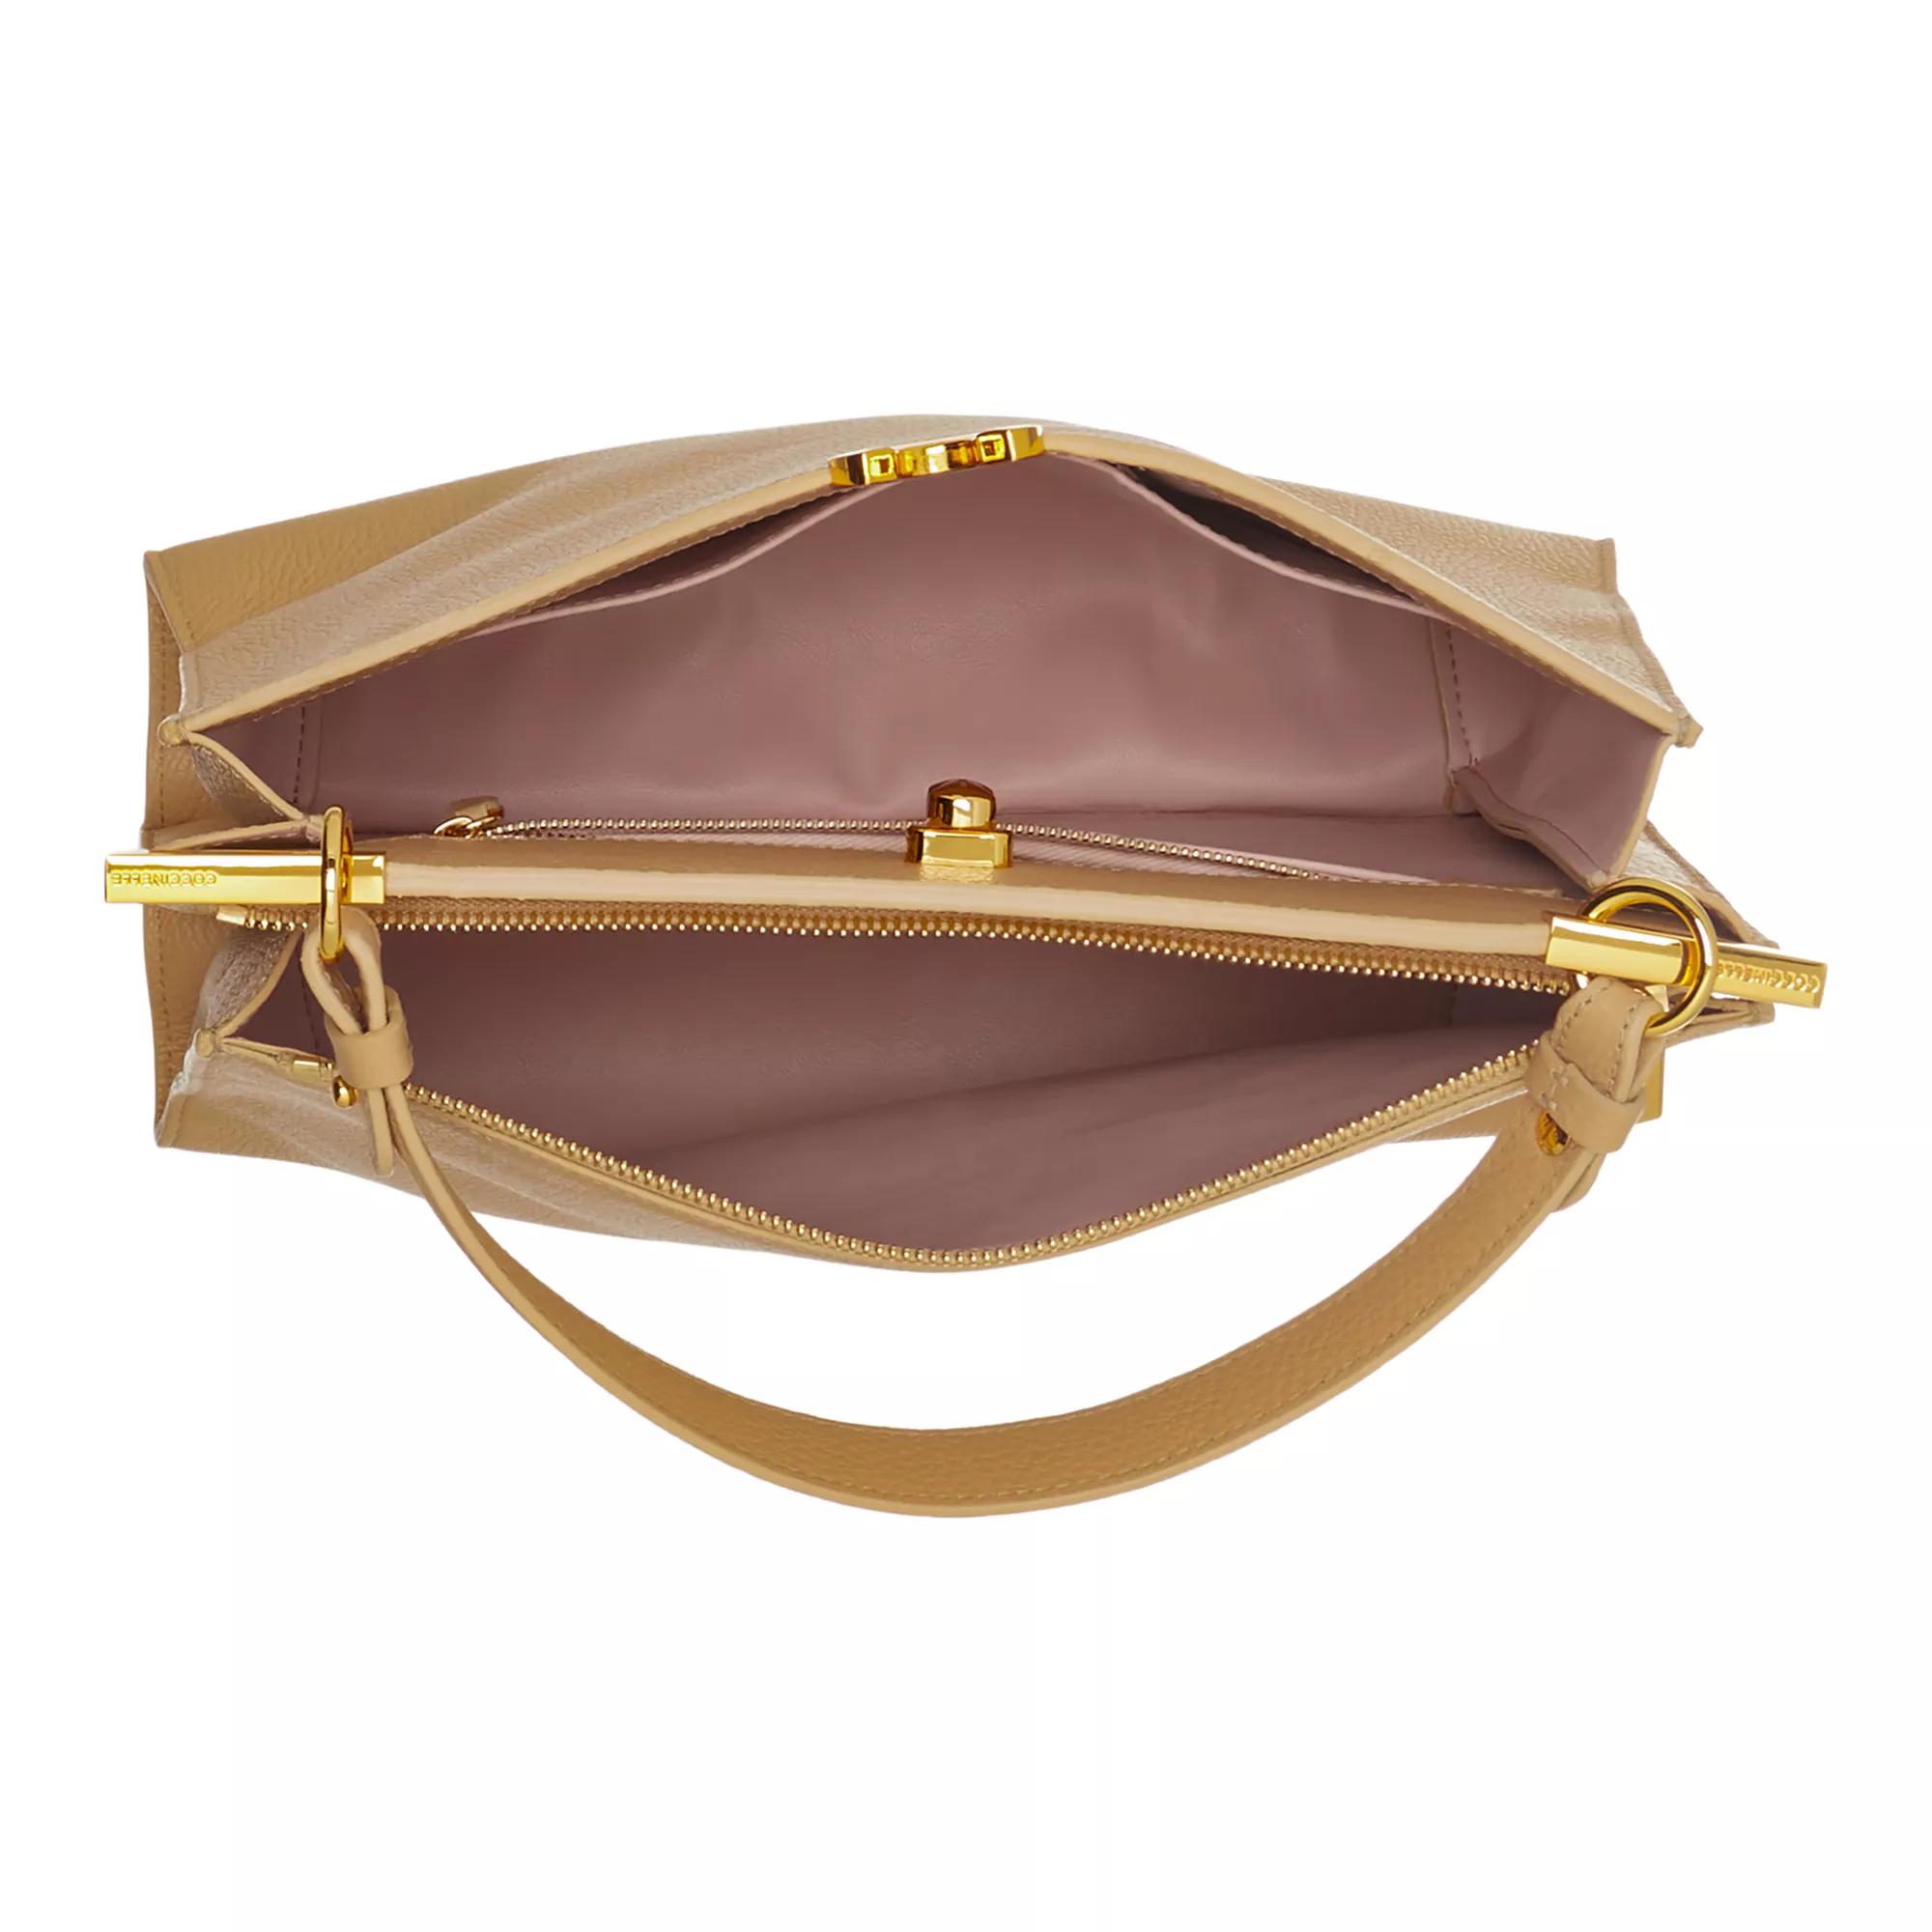 Coccinelle Crossbody bags Binxie Handbag in beige